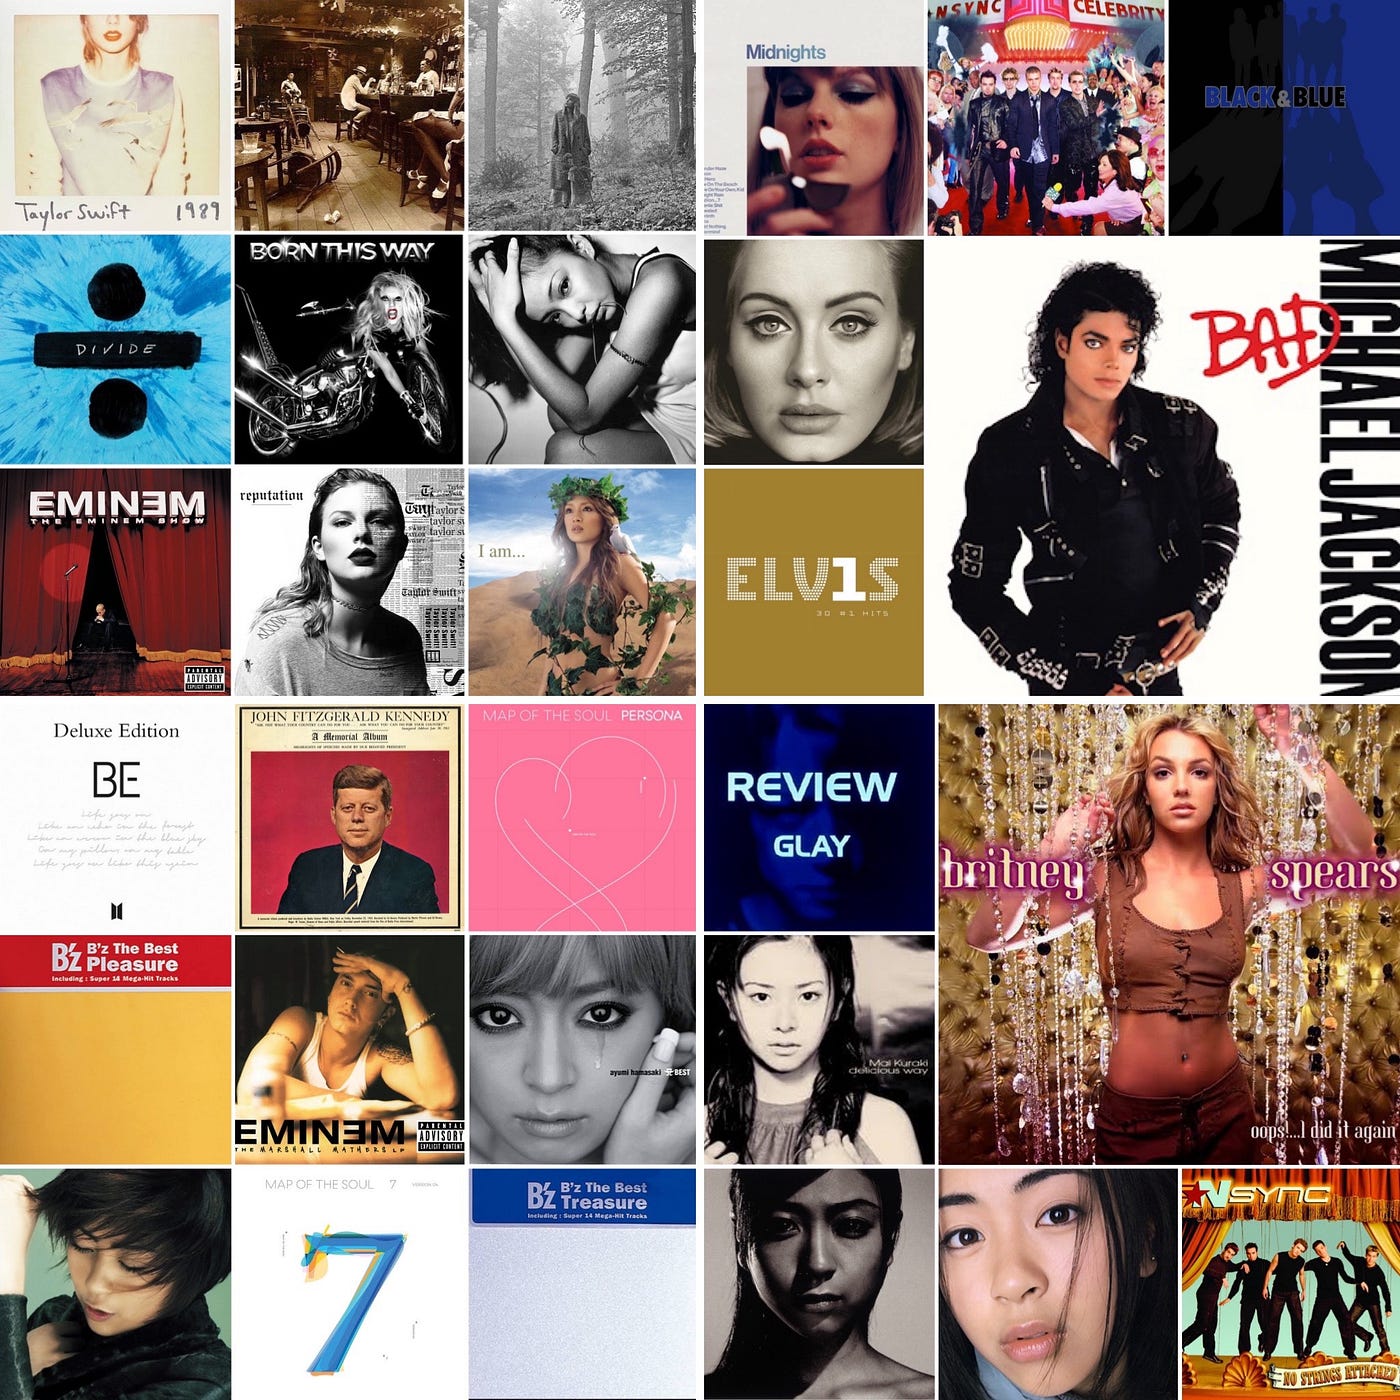 The World's Biggest First Week Album Sales | by Sheldon Rocha Leal, PhD |  Medium